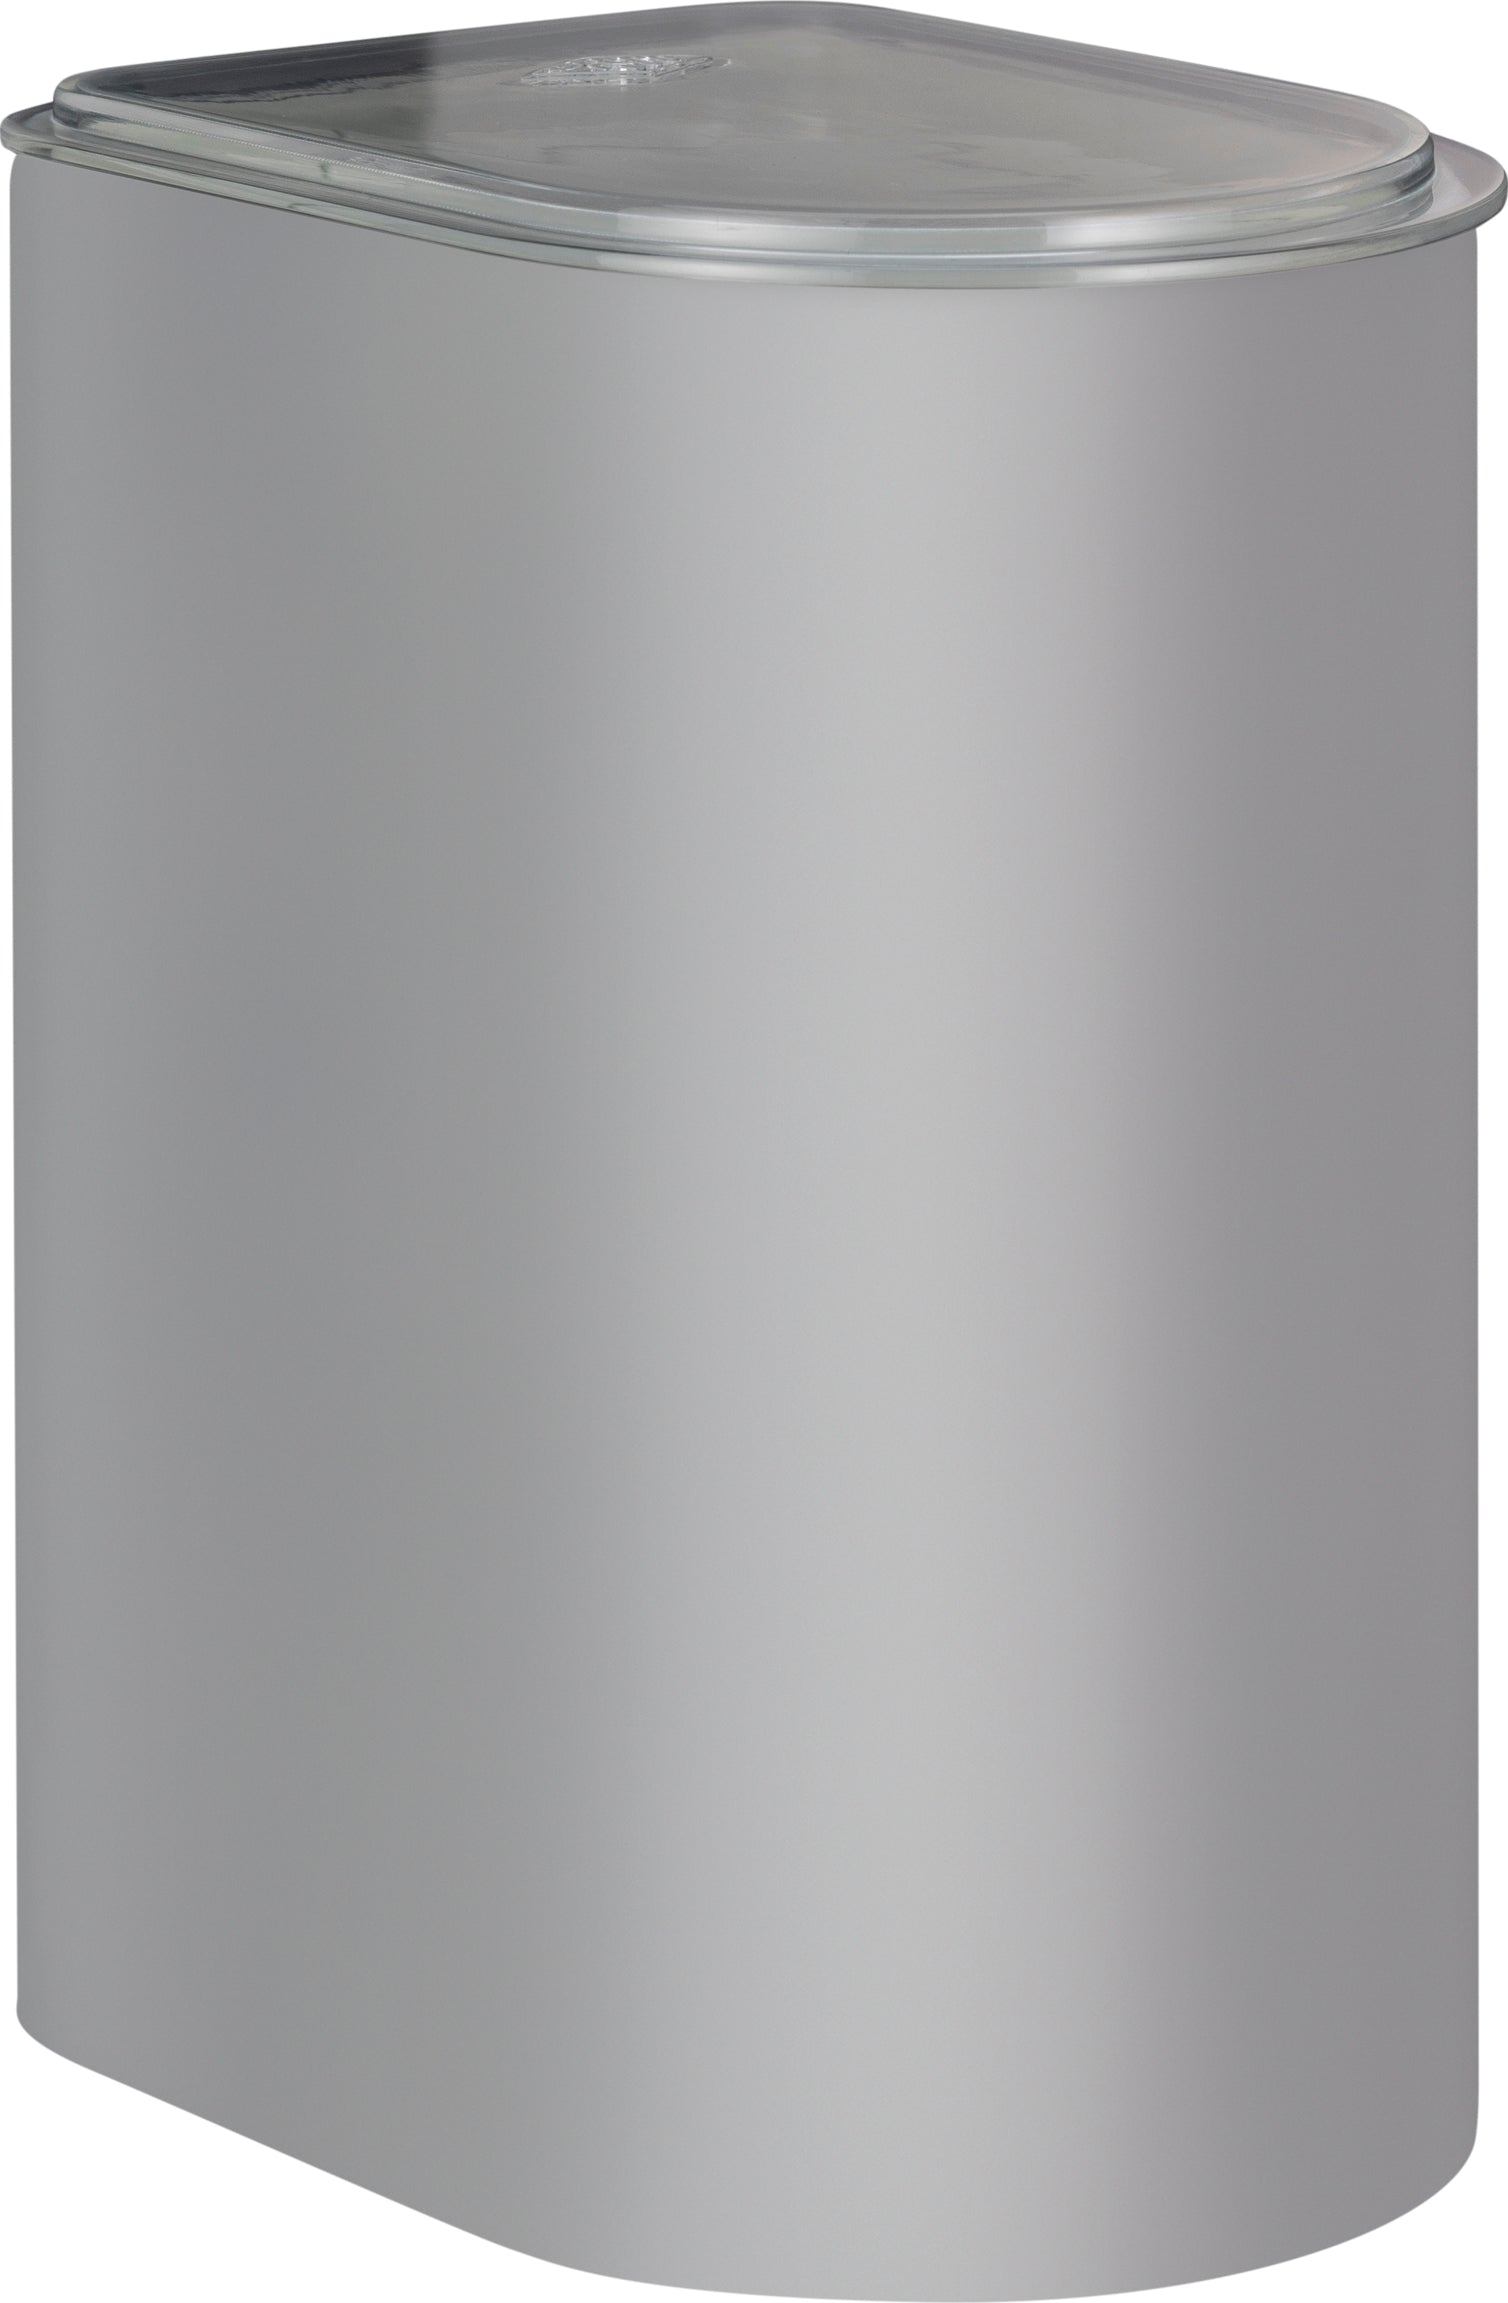 Wesco Kanister 3 Liter mit Acryldeckel, cooler grauer Matt